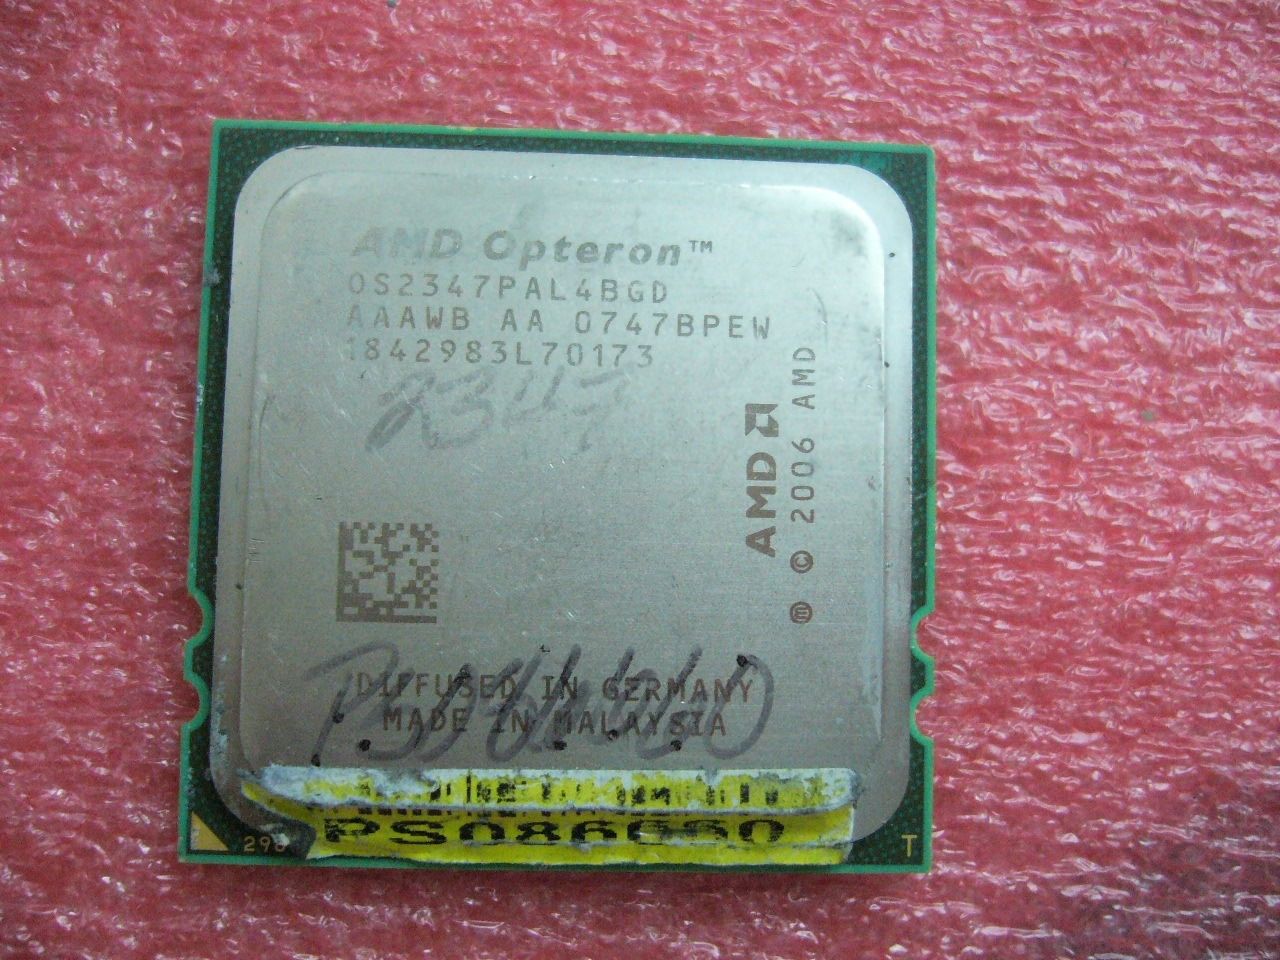 QTY 1x AMD Opteron 2347 HE 1.9 GHz Quad-Core (OS2347PAL4BGD) CPU Socket F 1207 - Click Image to Close